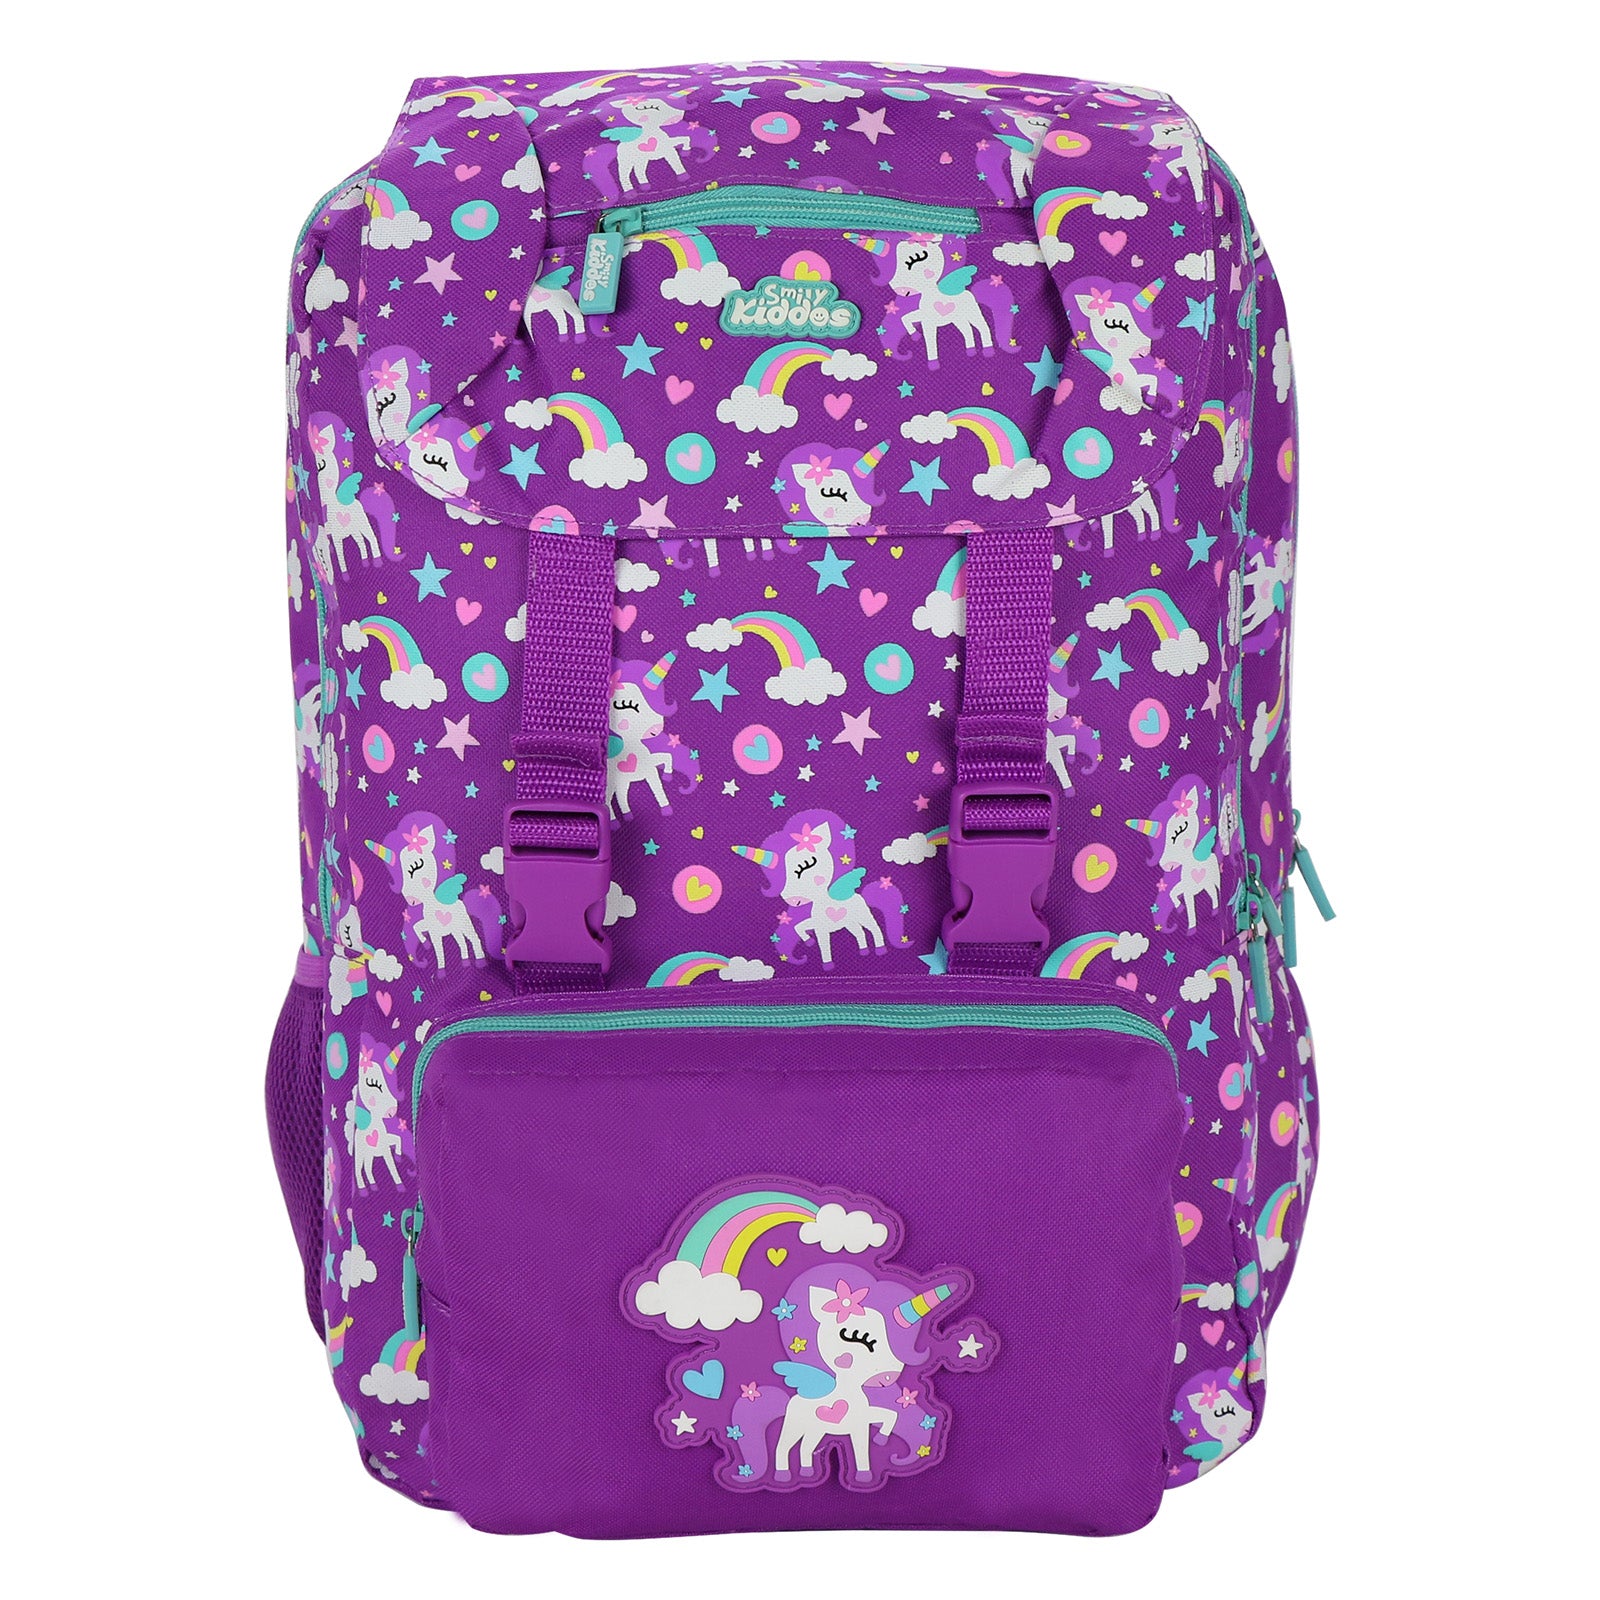 Smily kiddos Fancy Backpack